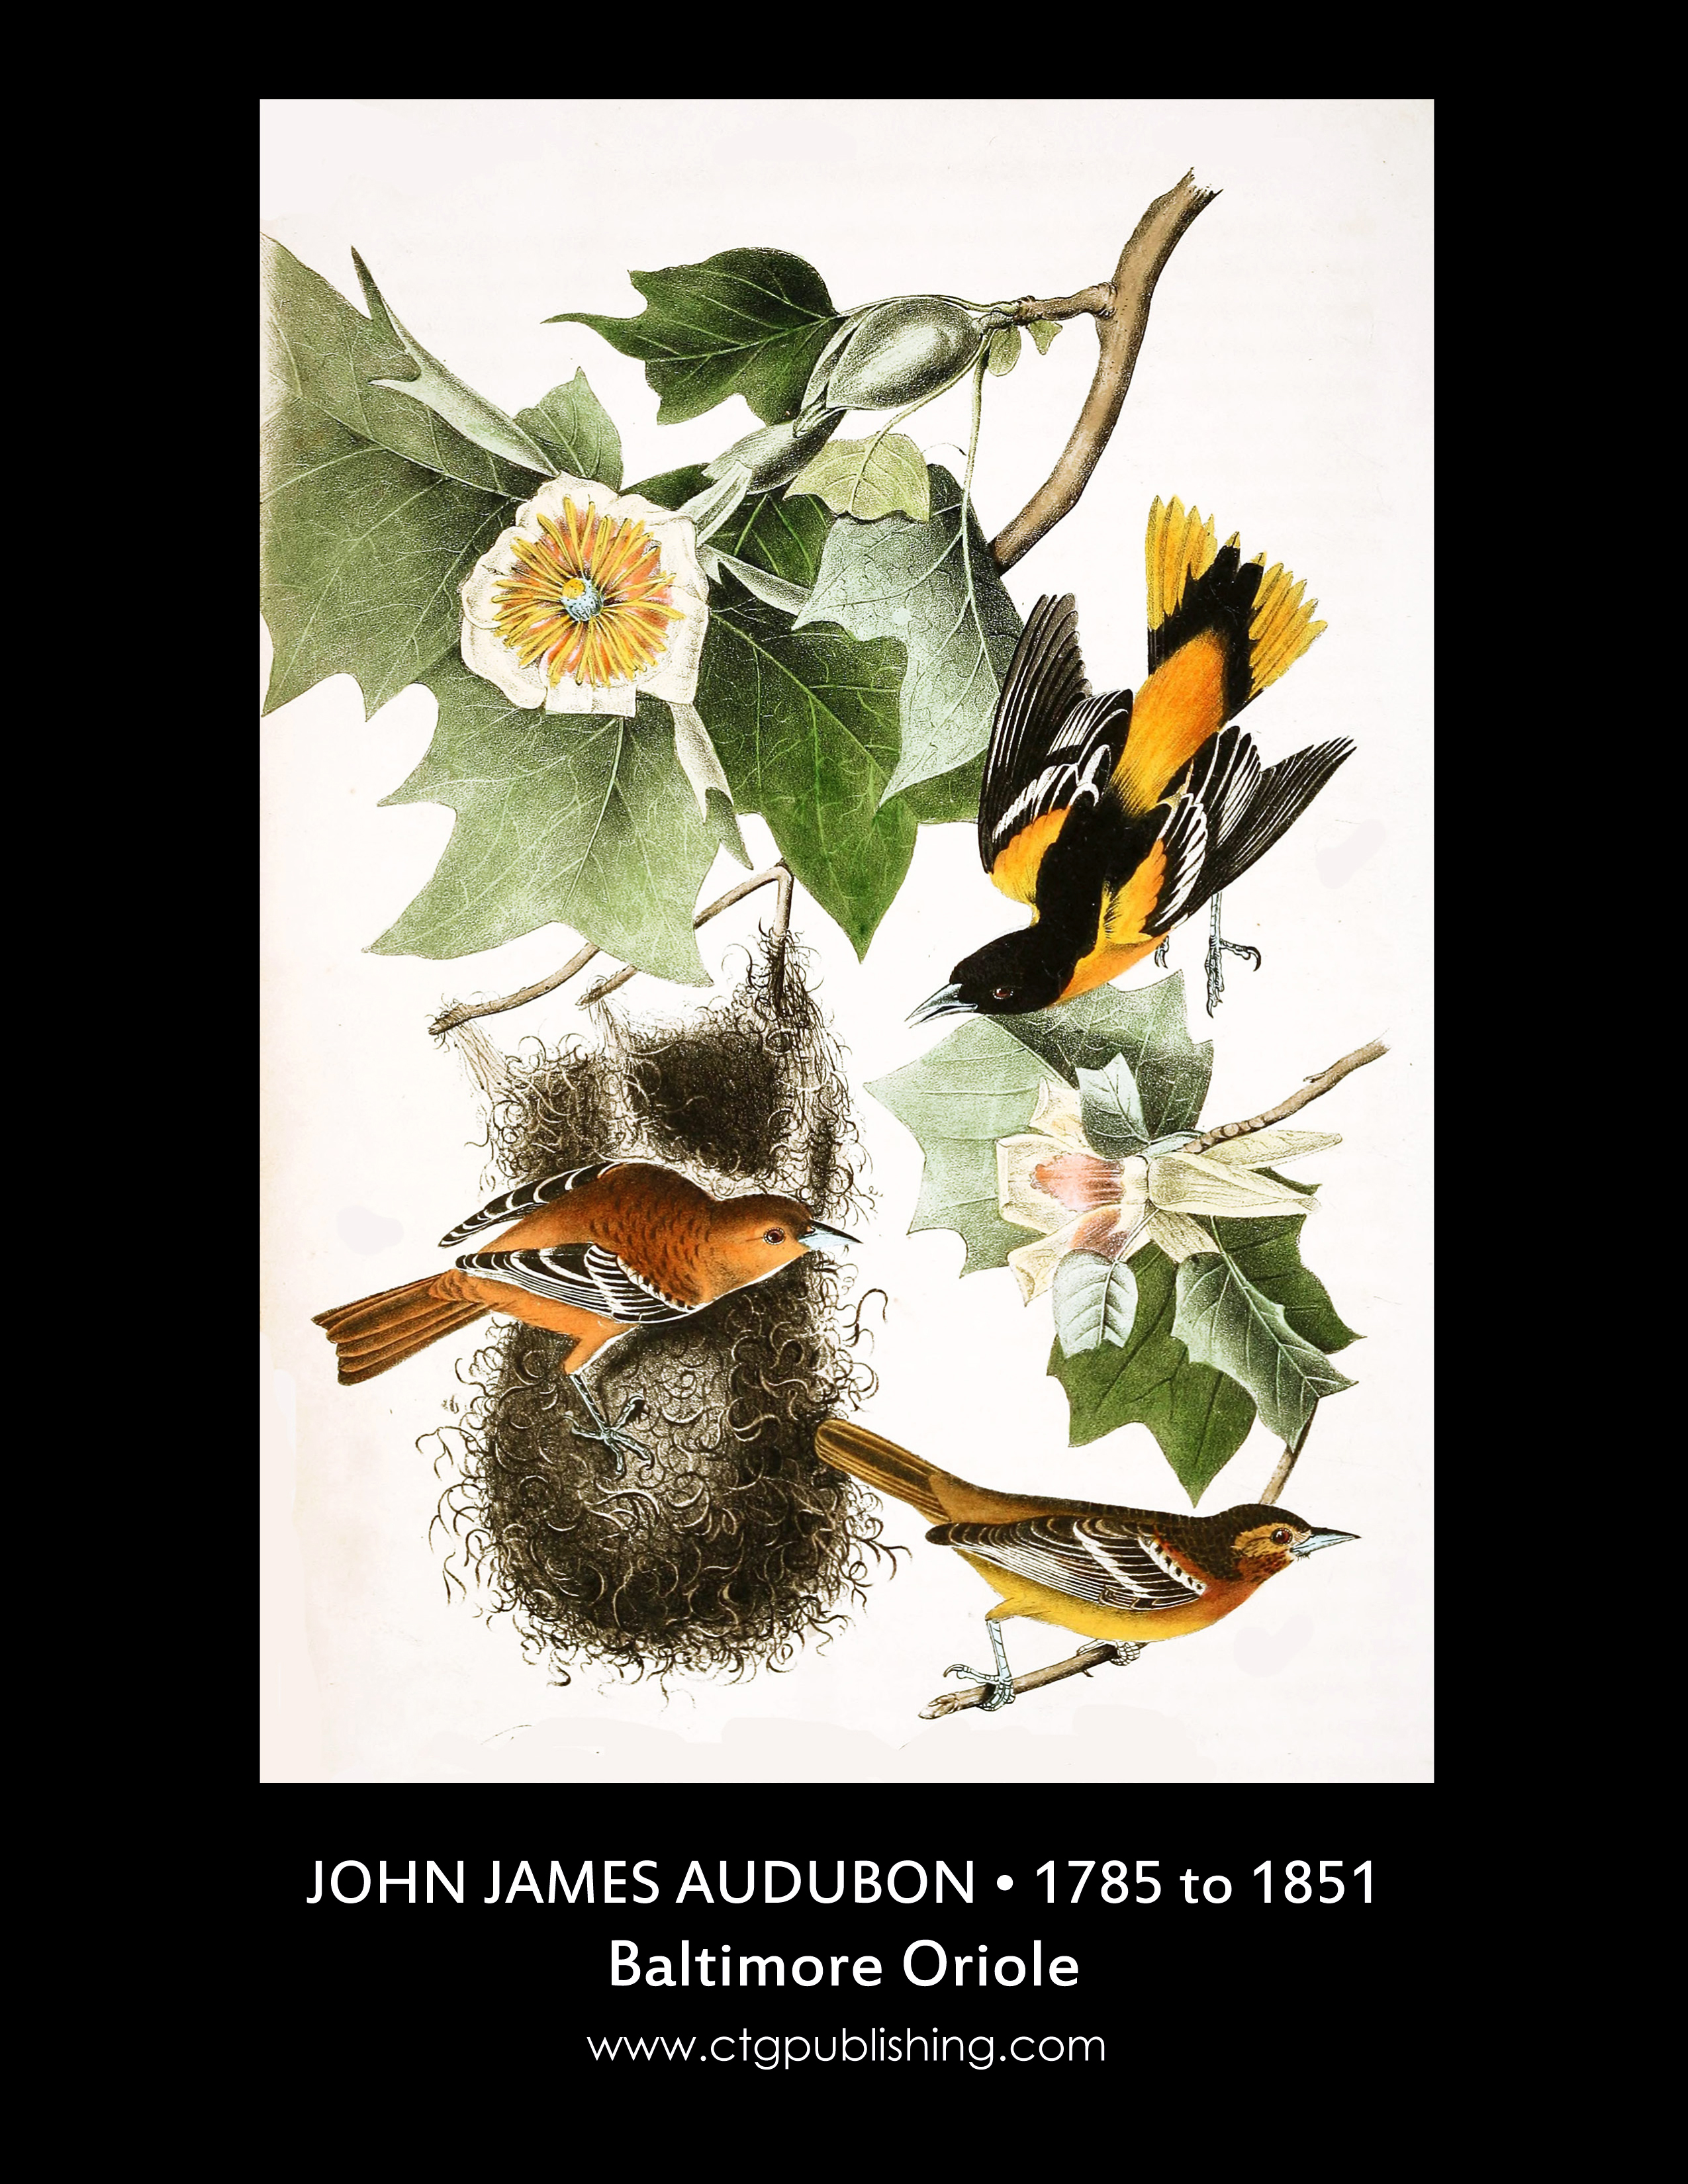 Baltimore Oriole Illustration By John James Audubon Circa 1840